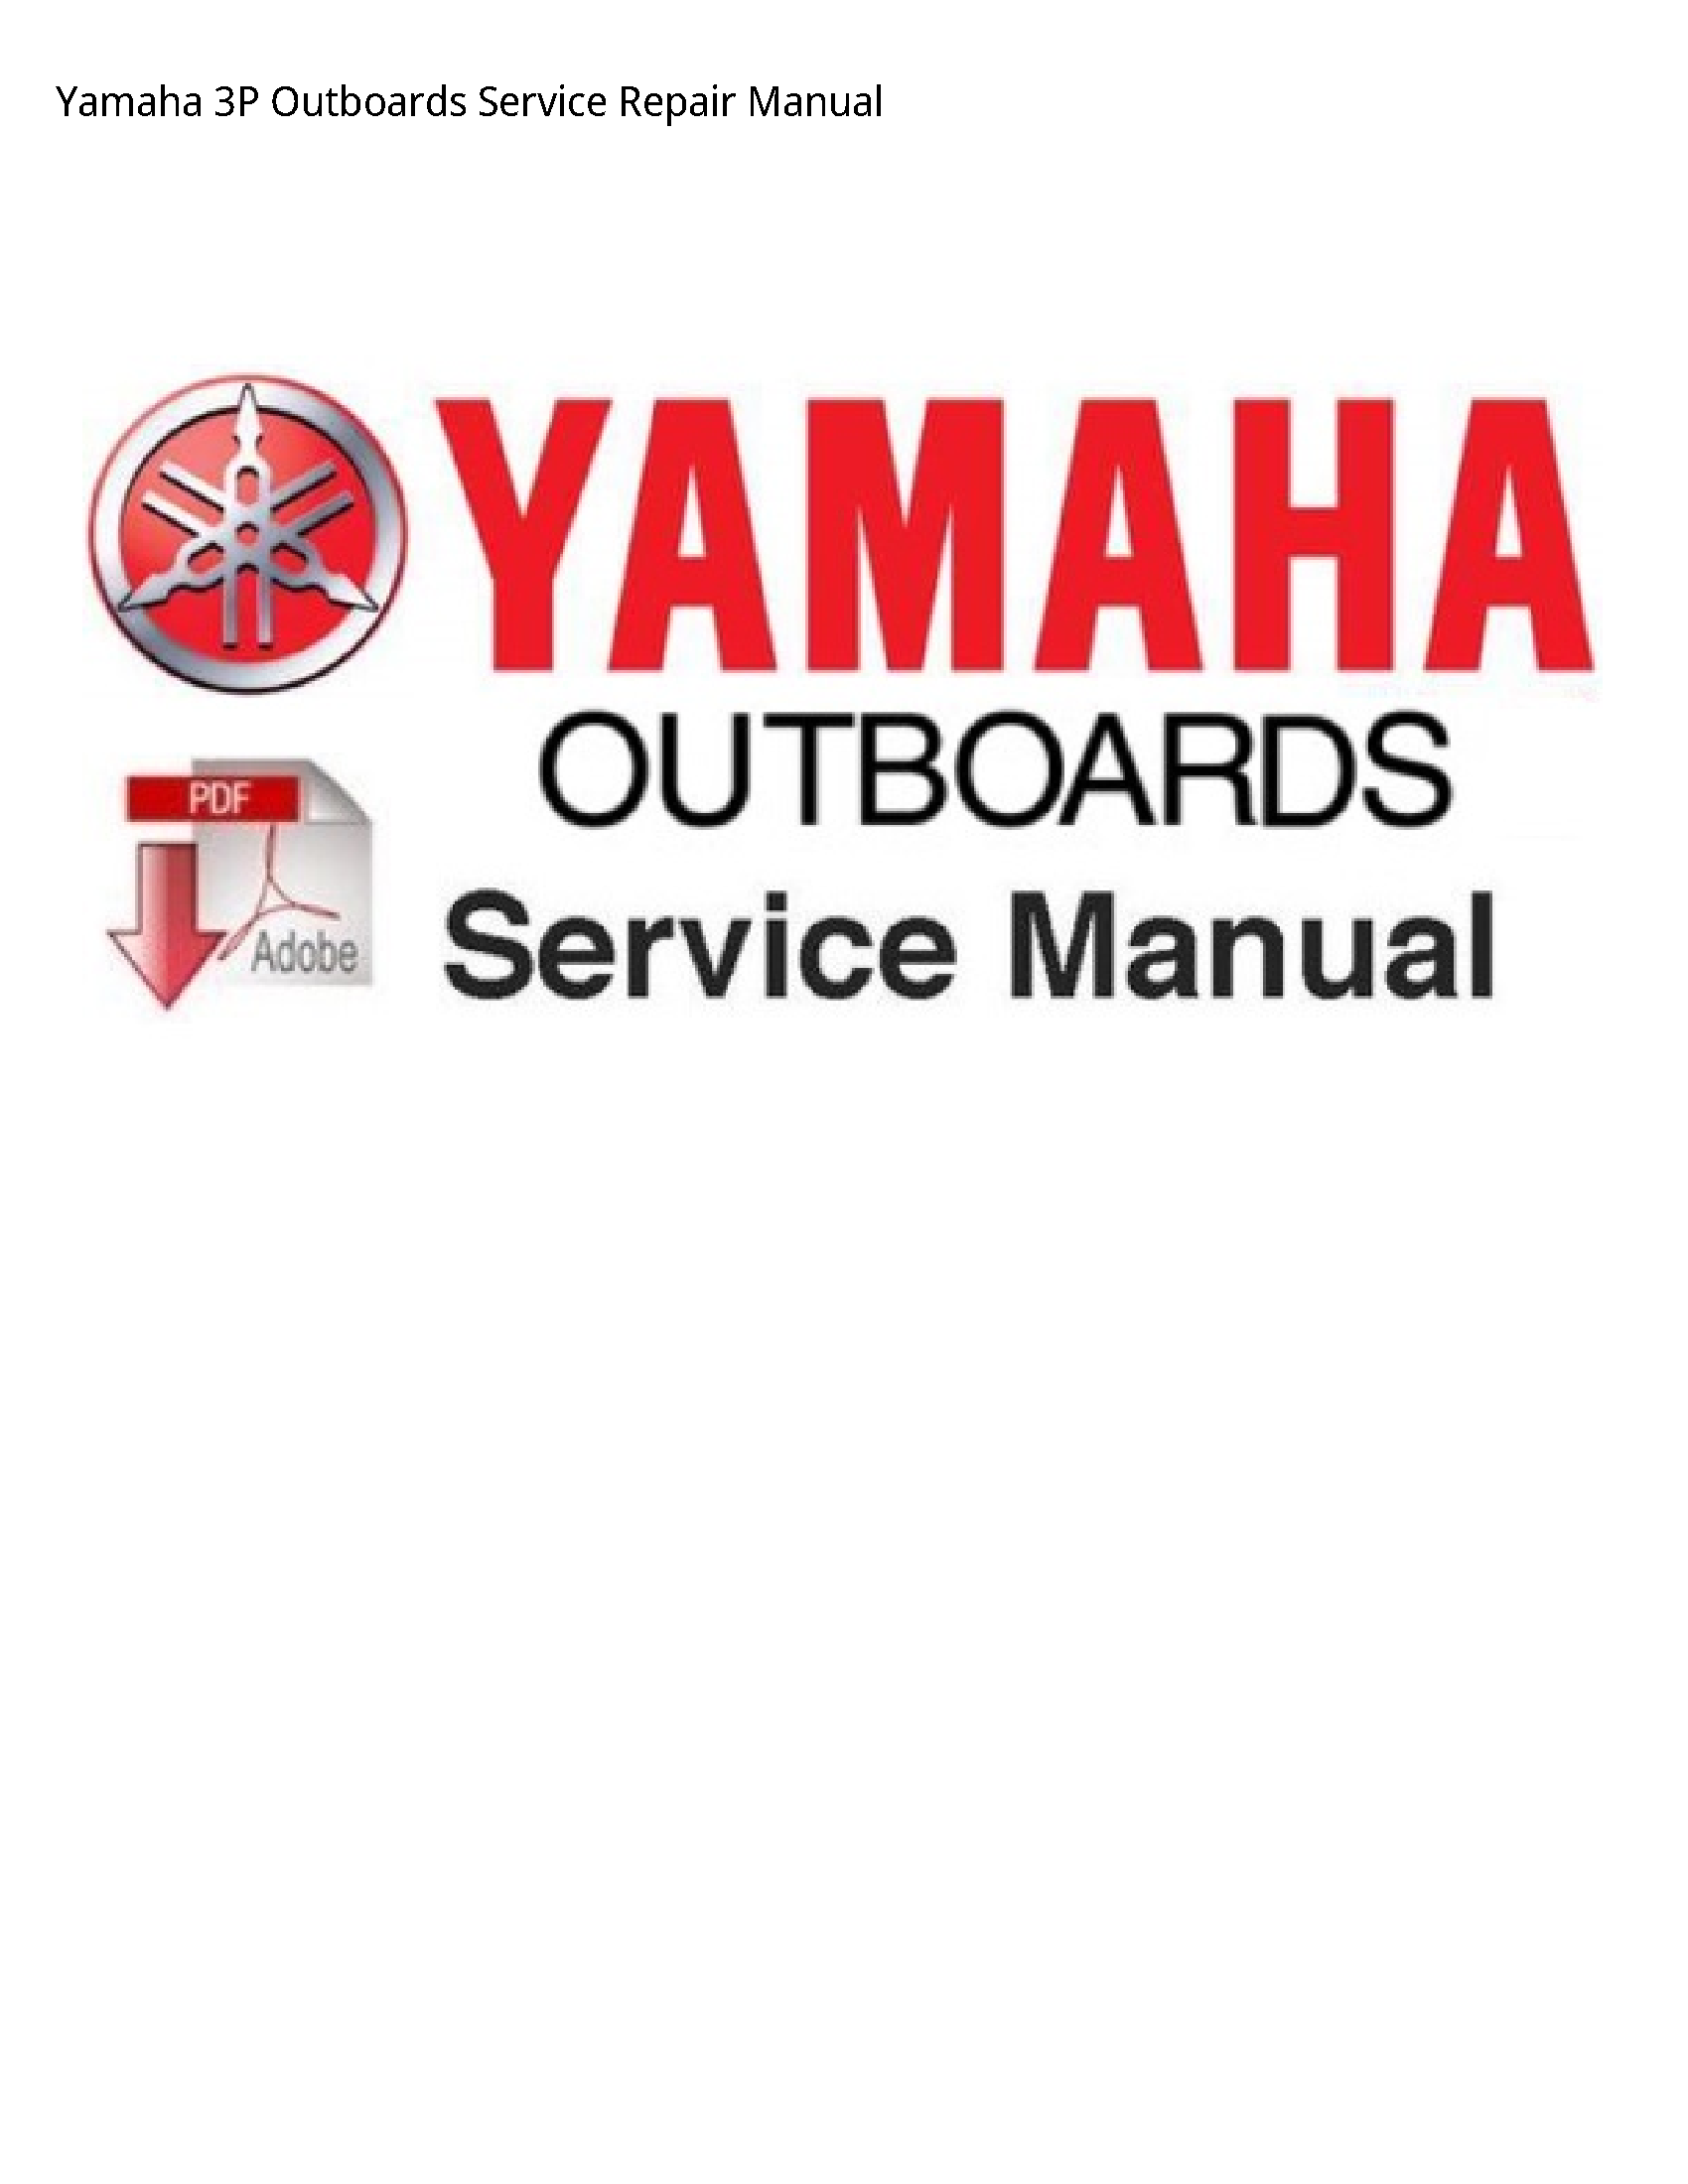 Yamaha 3P Outboards manual